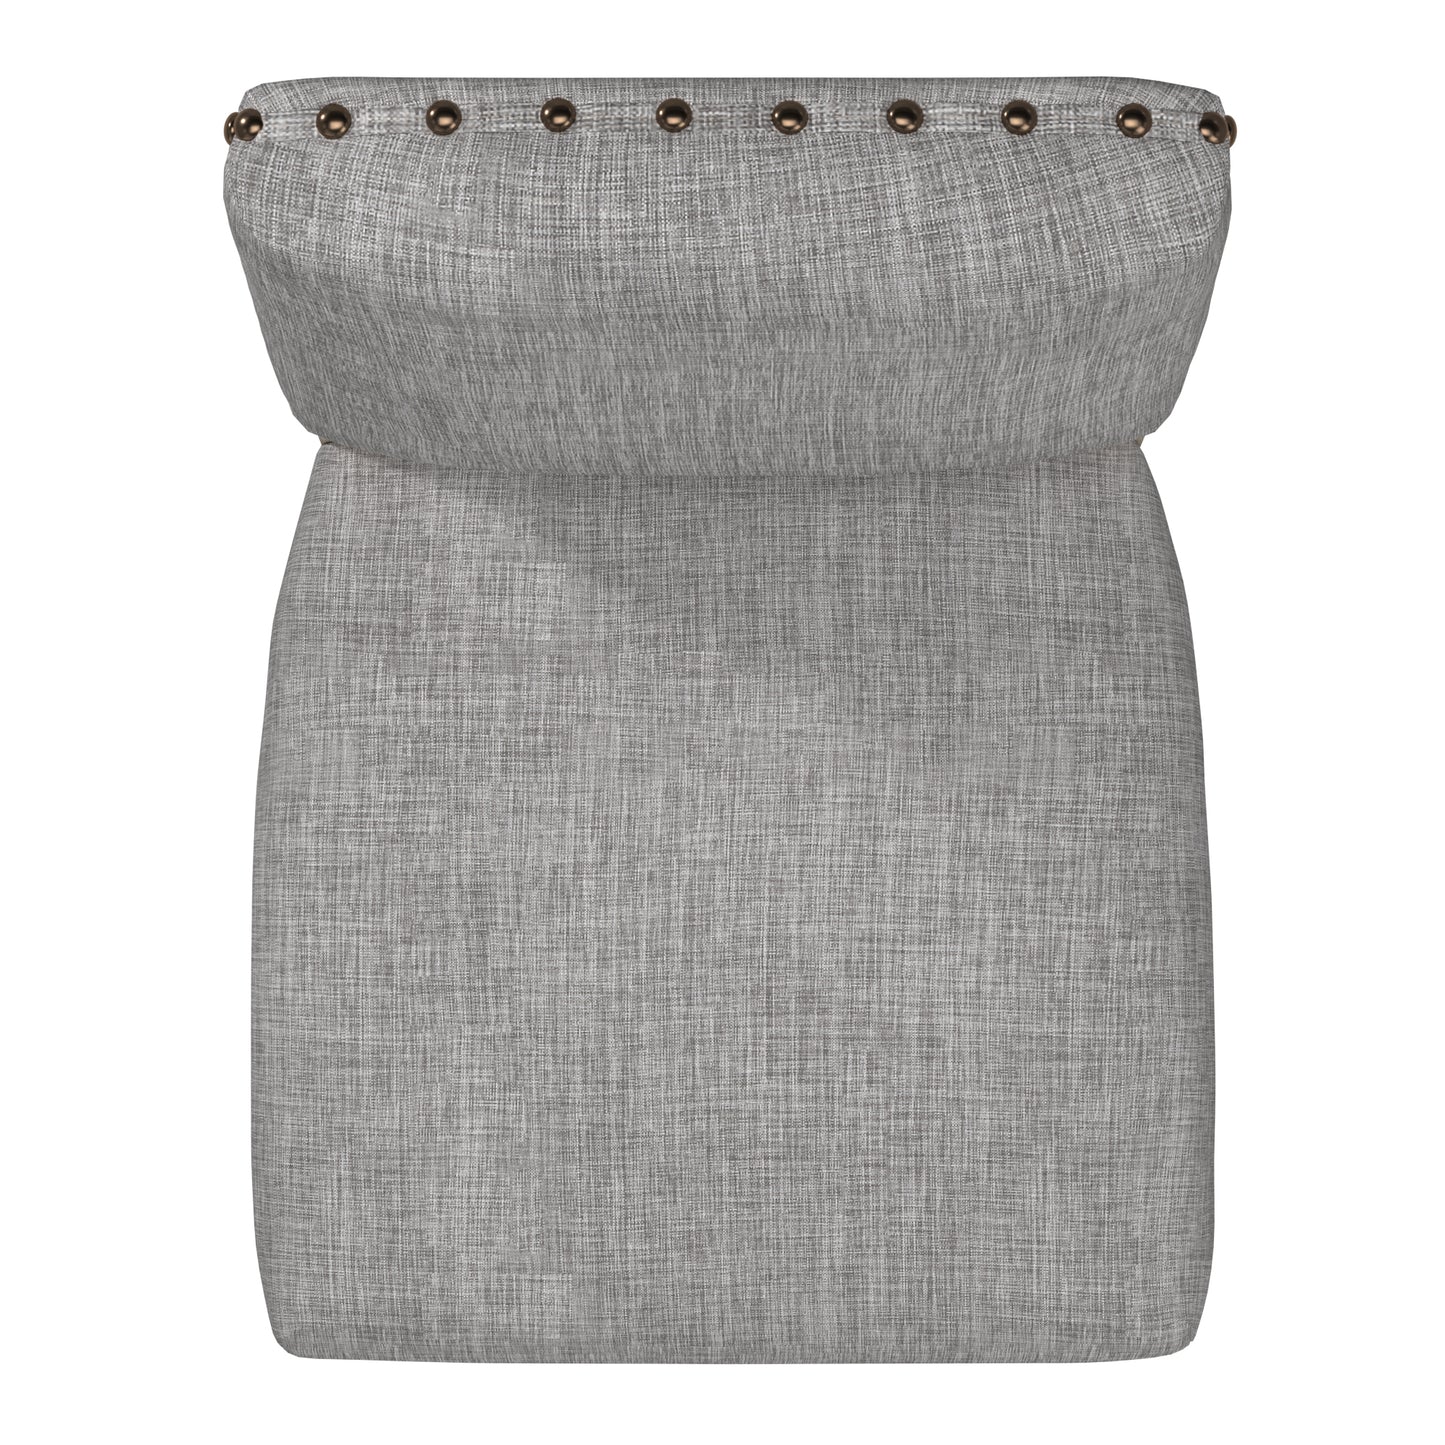 Linen Nailhead Chairs (Set of 2) - Grey Wash Finish, Grey Linen